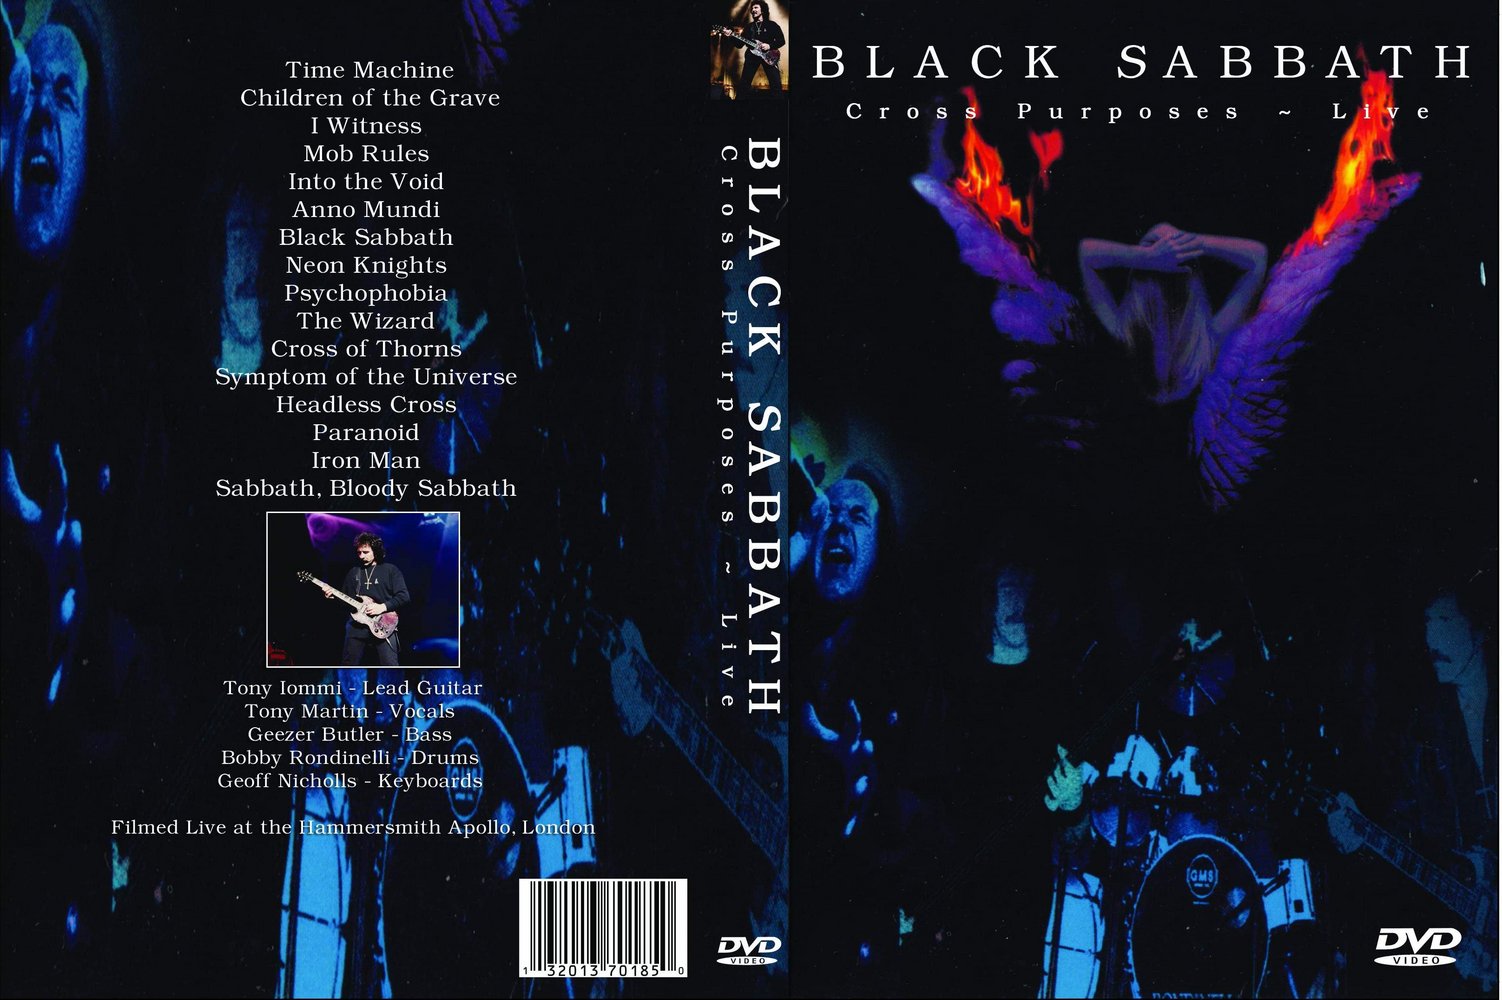 2 - Black_Sabbath_Cross_Purposes_Live-front.jpg